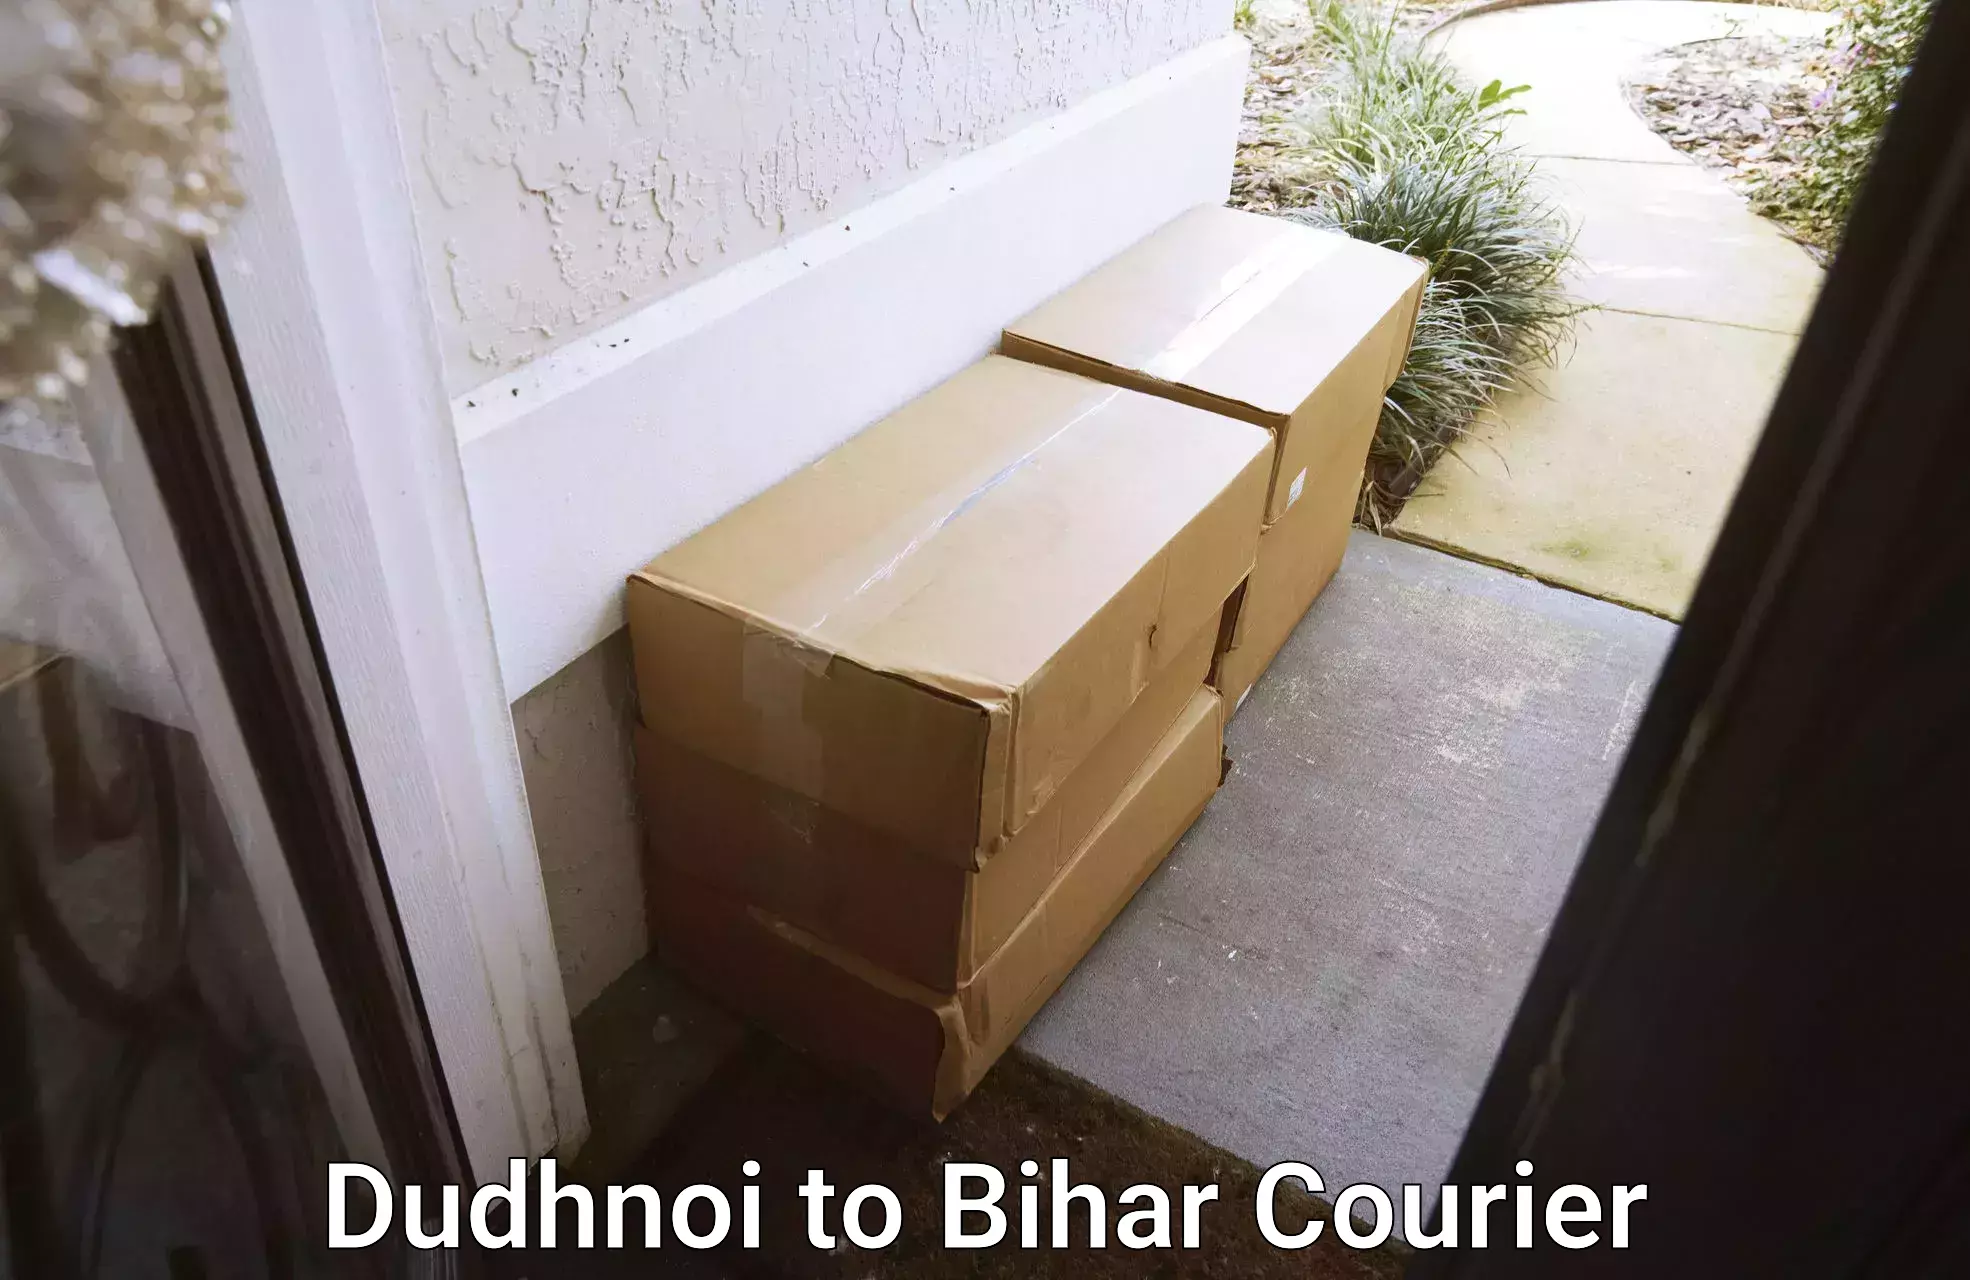 Heavy parcel delivery in Dudhnoi to Muzaffarpur